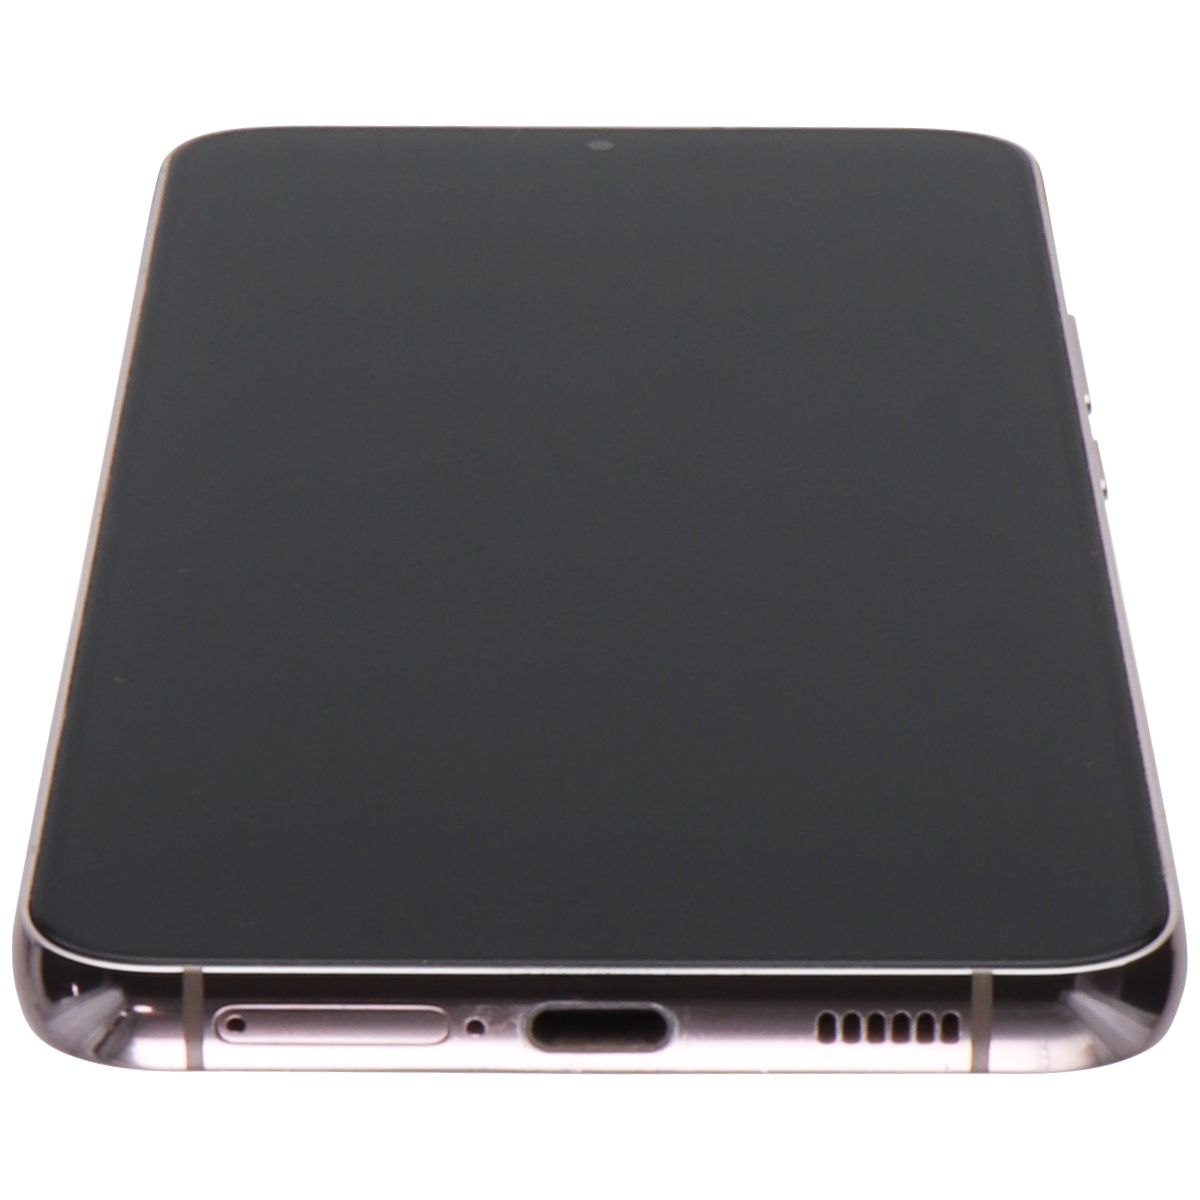 Samsung Galaxy S22+ 5G (6.6-inch) Smartphone (SM-S906U) AT&T - 256GB/Pink Gold